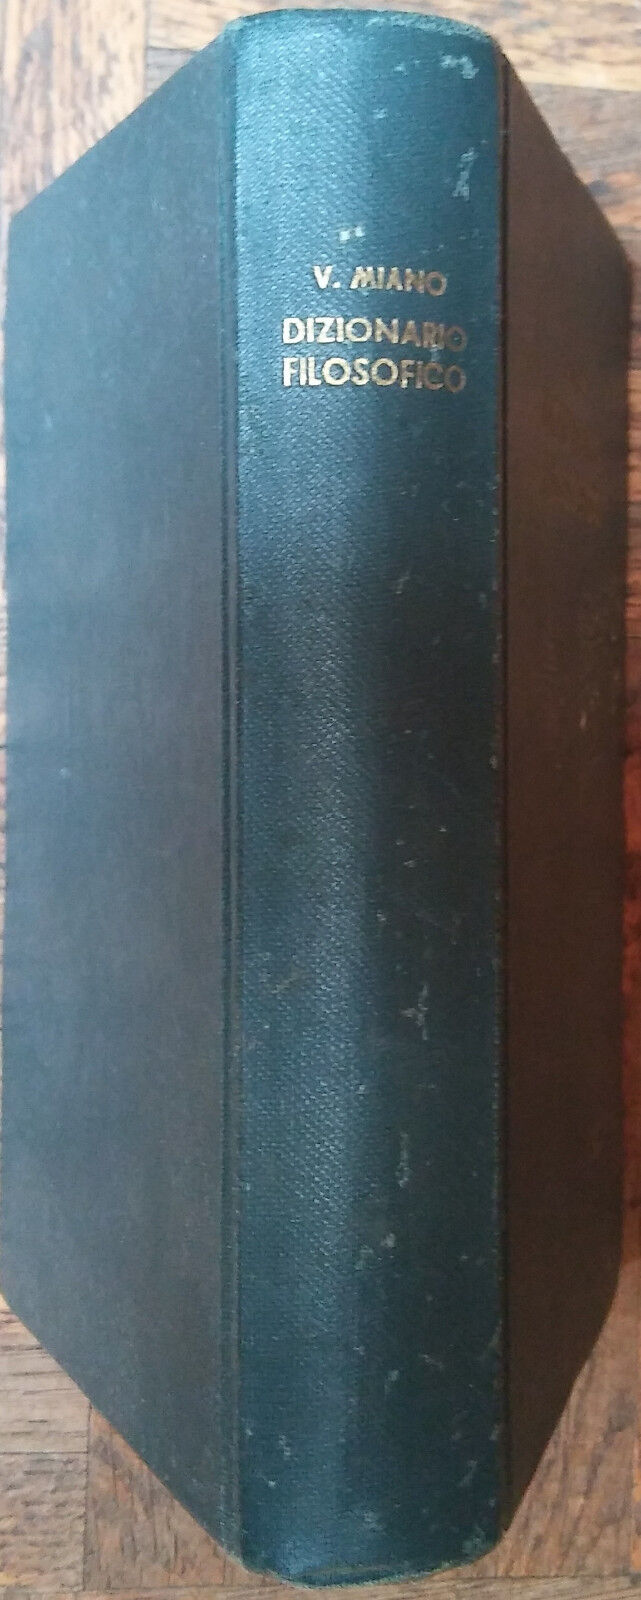 Dizionario filosofico - AA.VV. - Societ? Editrice Internazionale,1963 - R